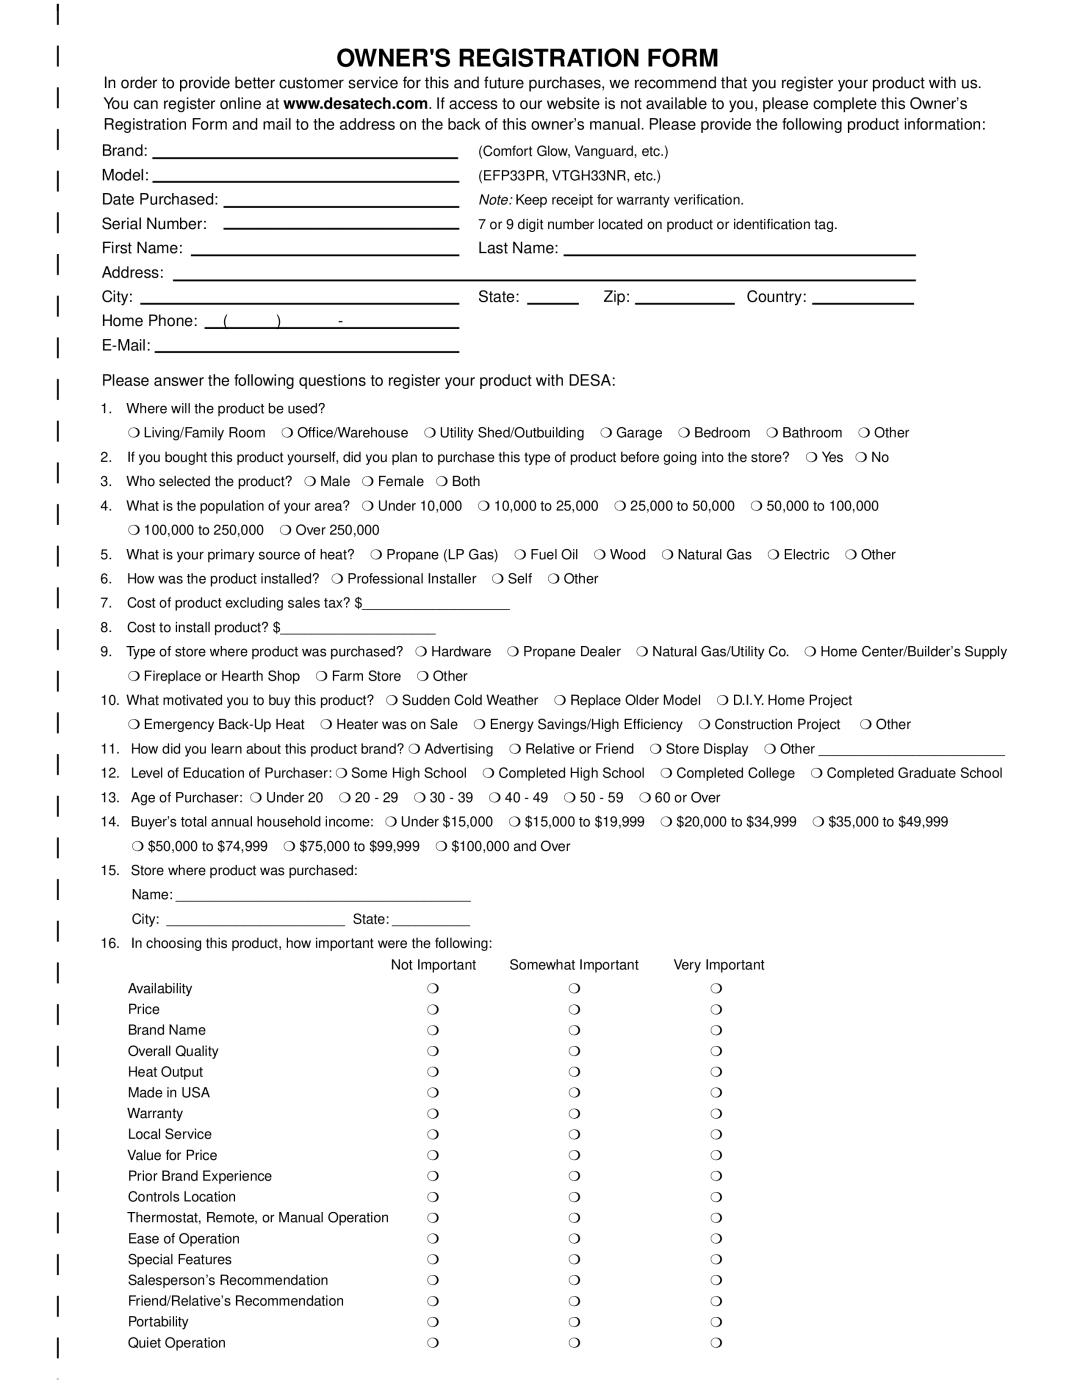 Desa VP325E(B) installation manual Owners Registration Form 